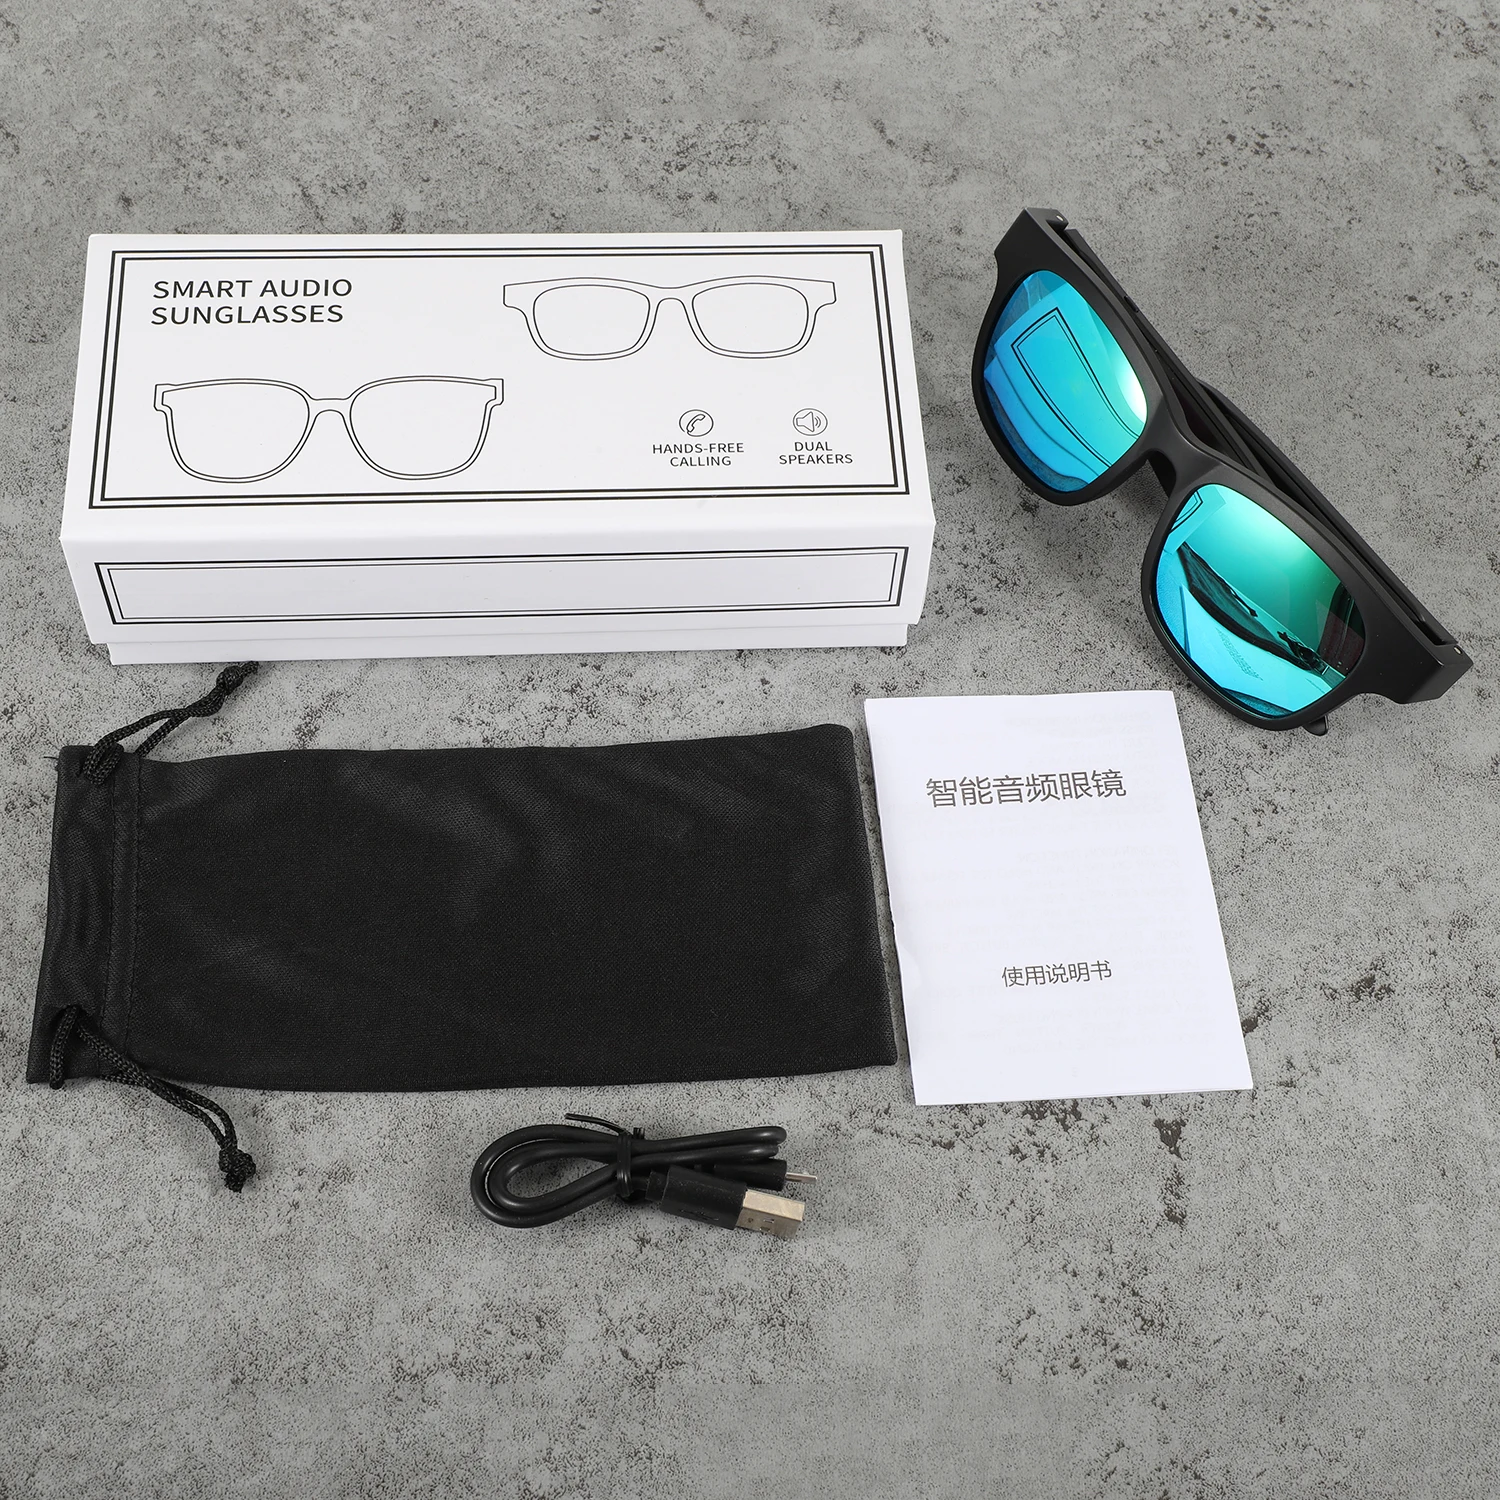 
Amazon Hot selling Sunglasses Bone Conduction Frame BT Wireless Sports Glasses Colors Sunglasses Audio Smart Glasses 